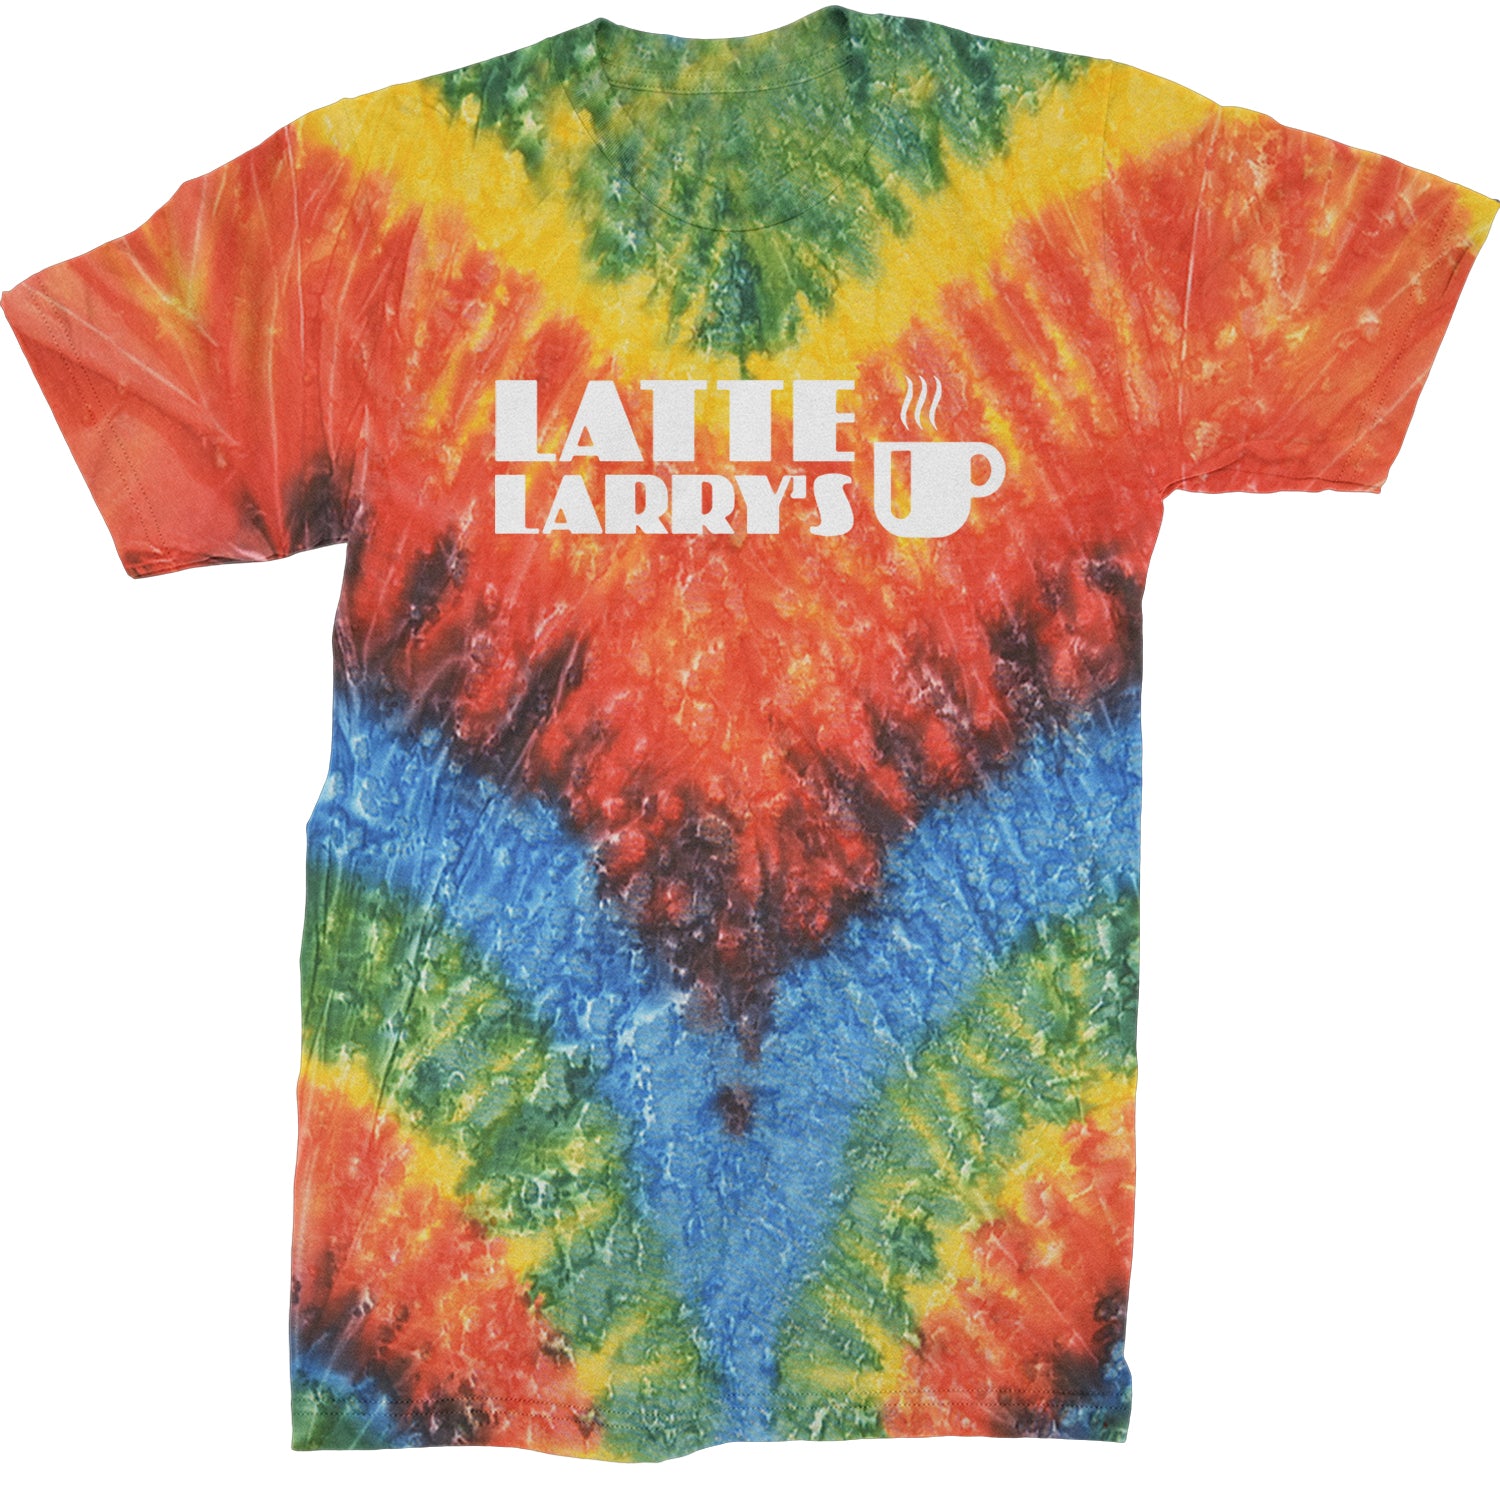 Latte Larry's Enthusiastic Coffee Mens T-shirt Tie-Dye Woodstock